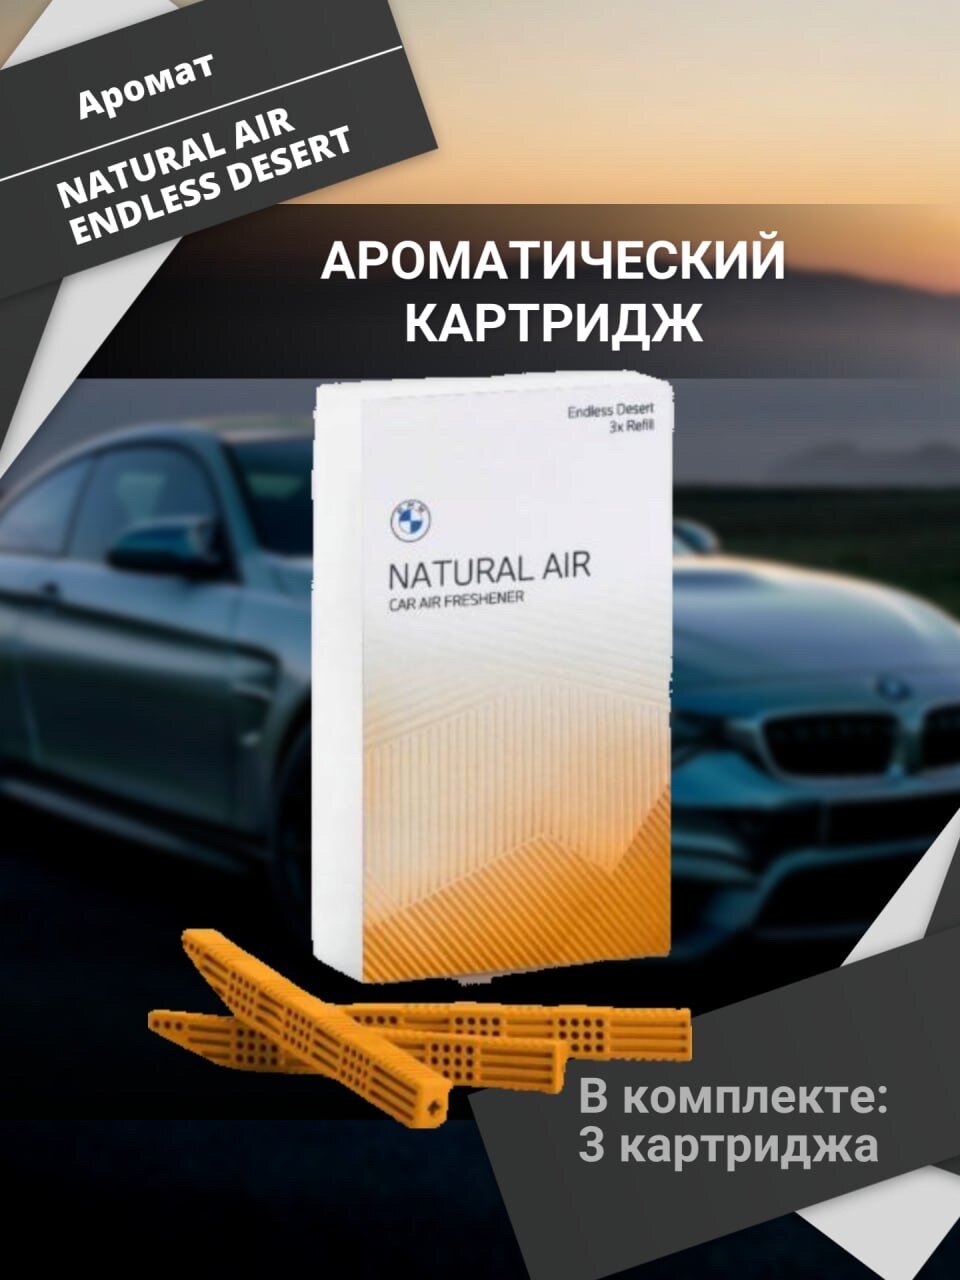 Ароматические картриджи BMW Natural Air Endless Desert версии 2023